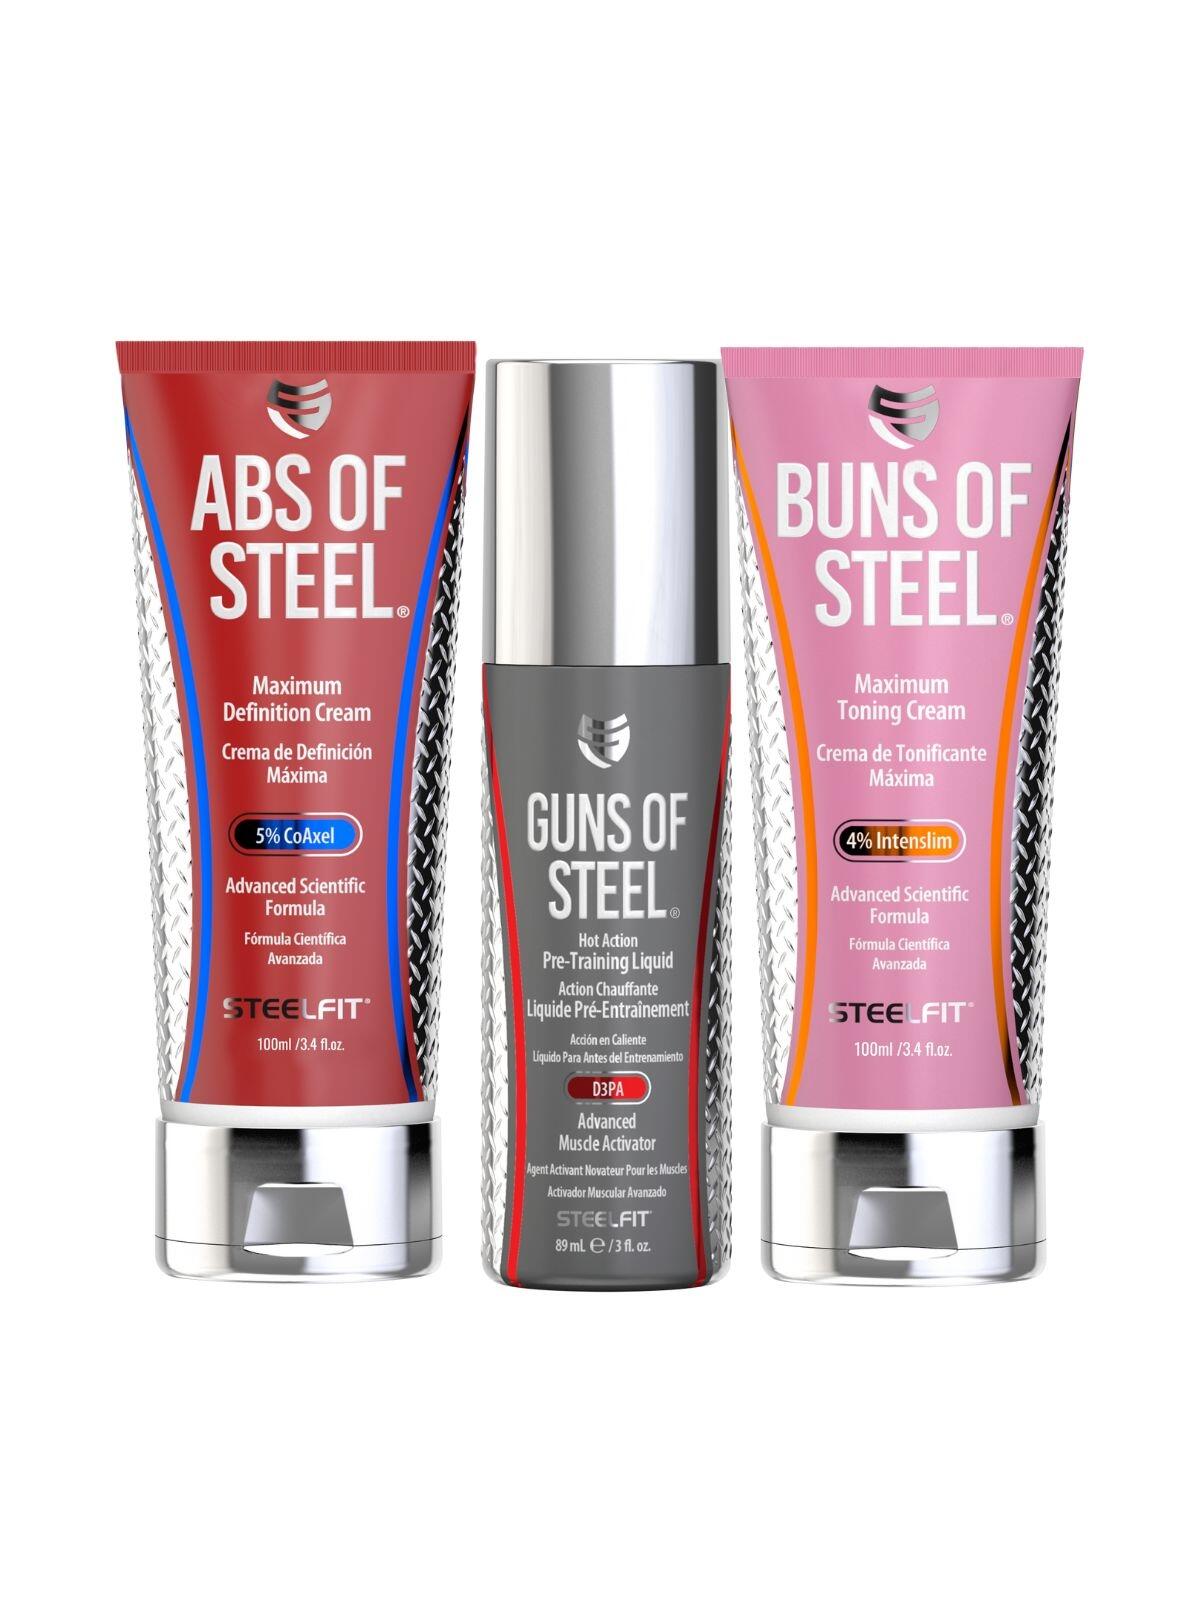 Abs of Steel + Buns of Steel (100ml/un) + Guns of Steel (89ml)